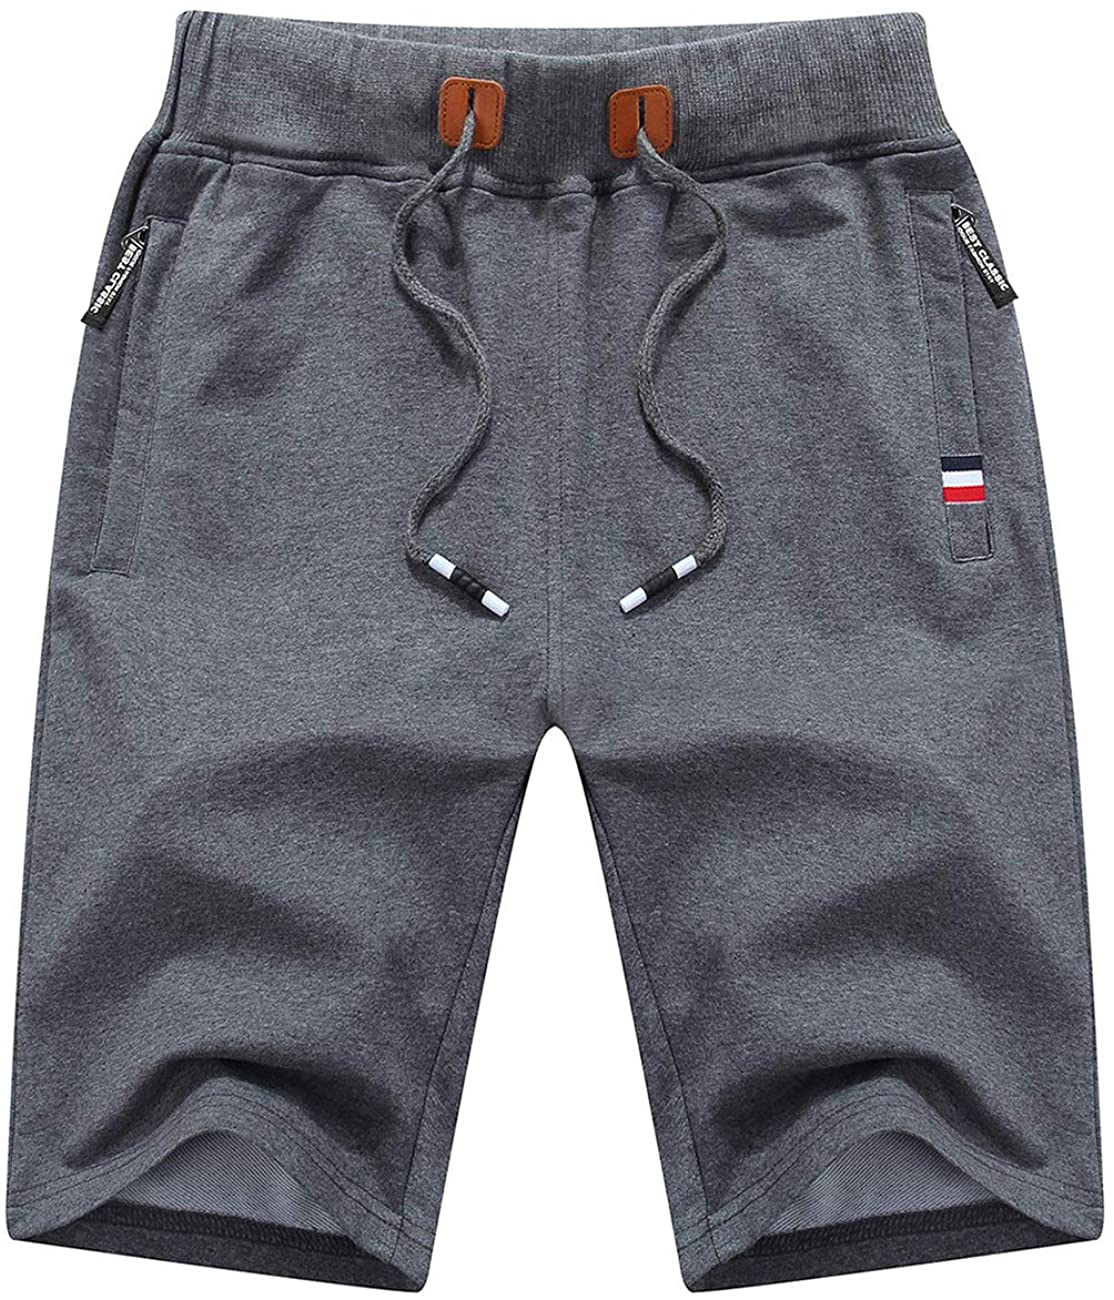 Tansozer Mens Shorts Casual Workout Drawstring Shorts with Elastic Waist and Zipper Pockets 